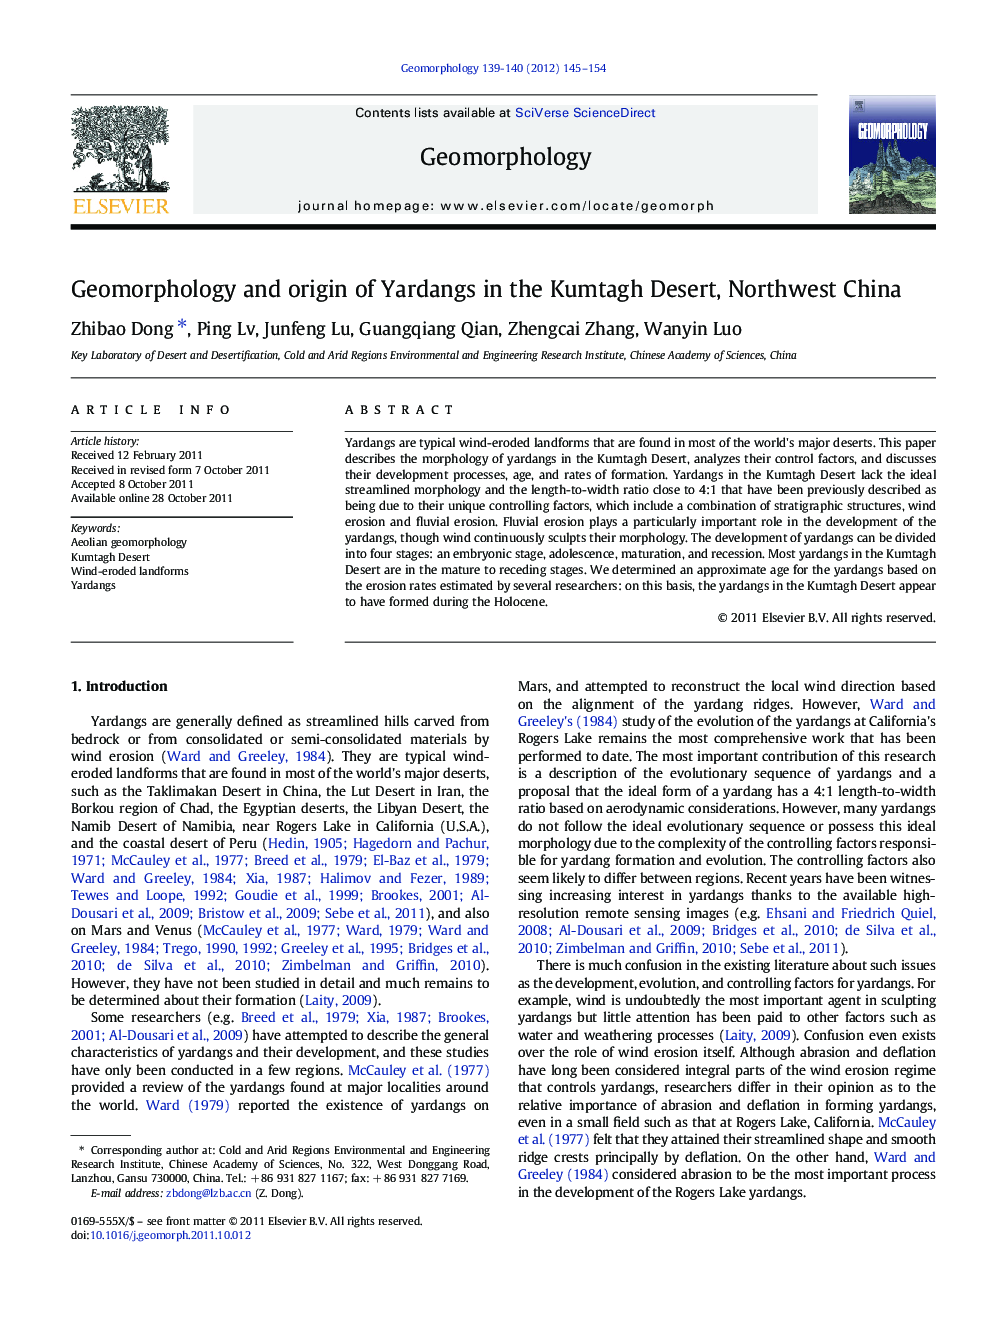 Geomorphology and origin of Yardangs in the Kumtagh Desert, Northwest China